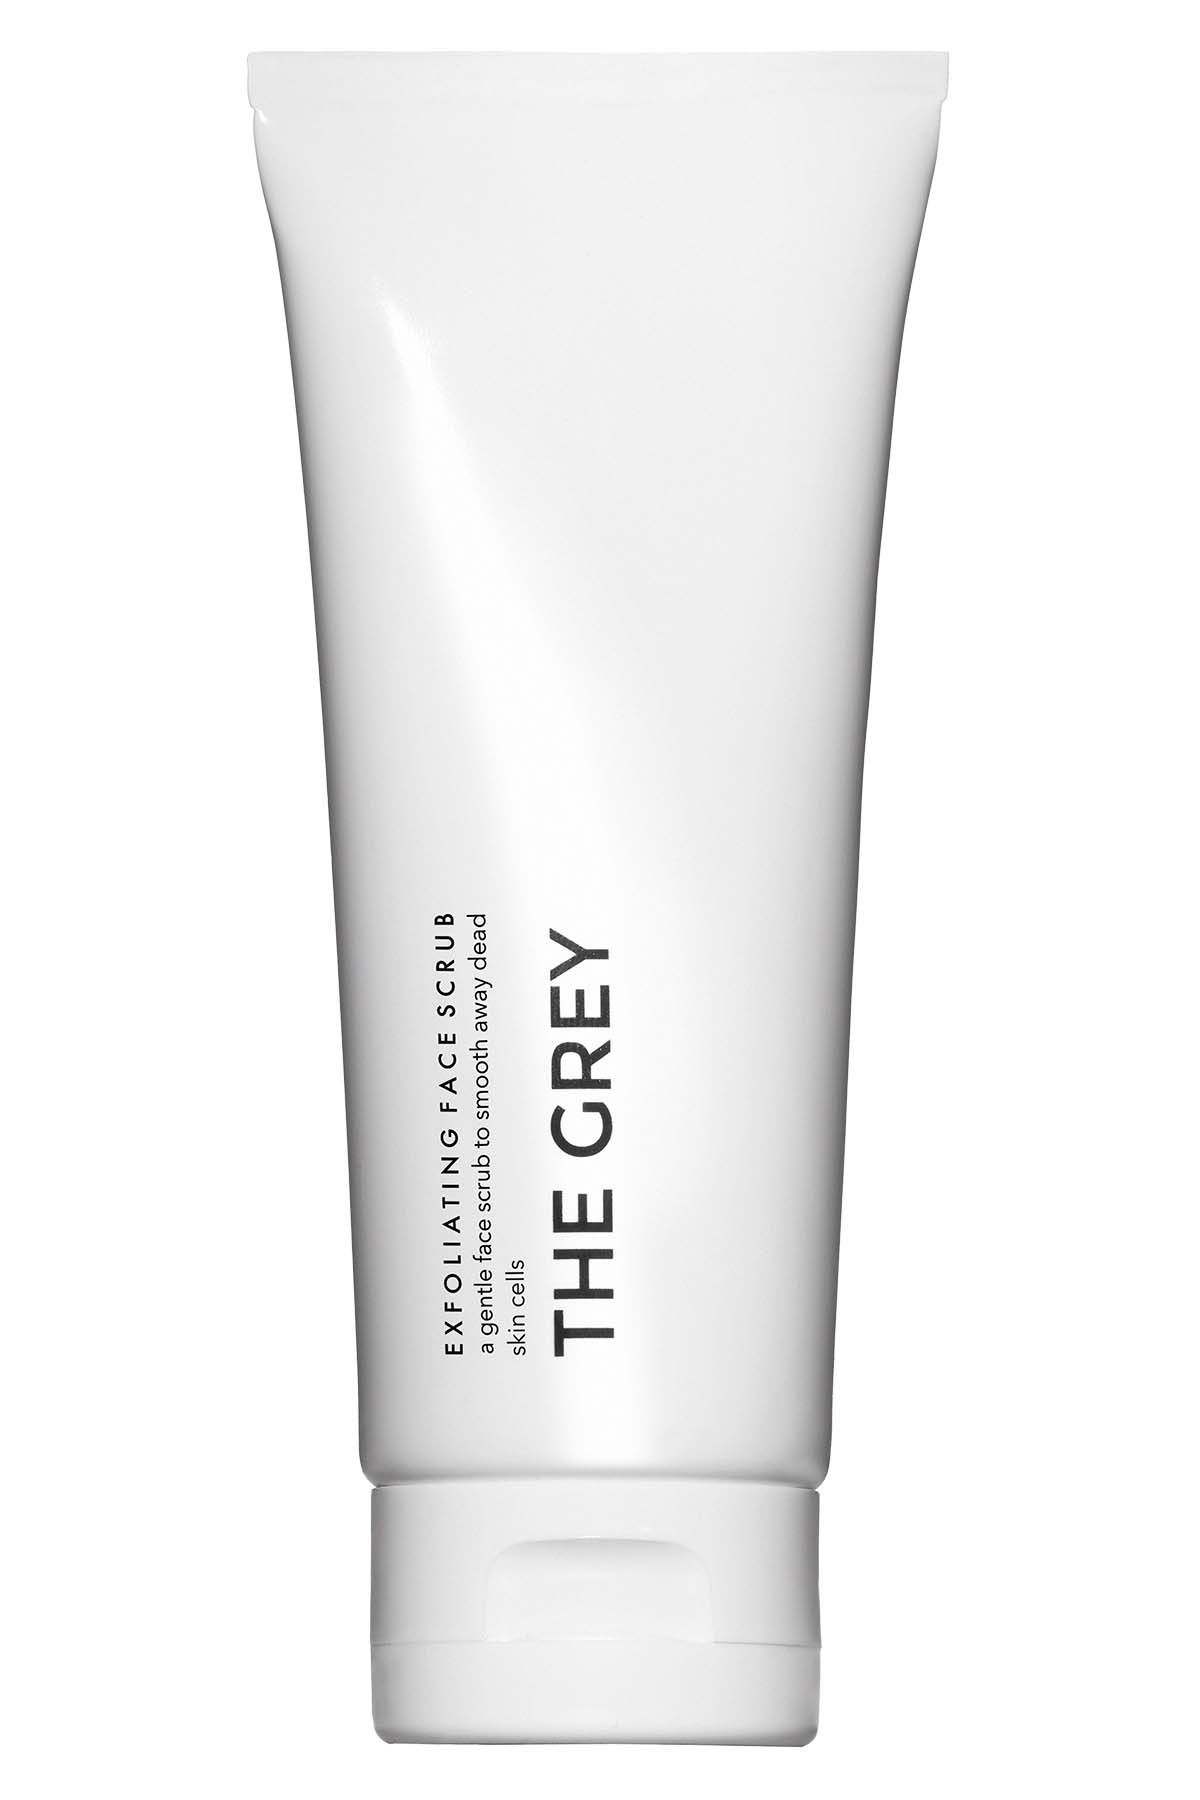 The Grey Men's Skincare - Exfoliating Face Scrub 100ML